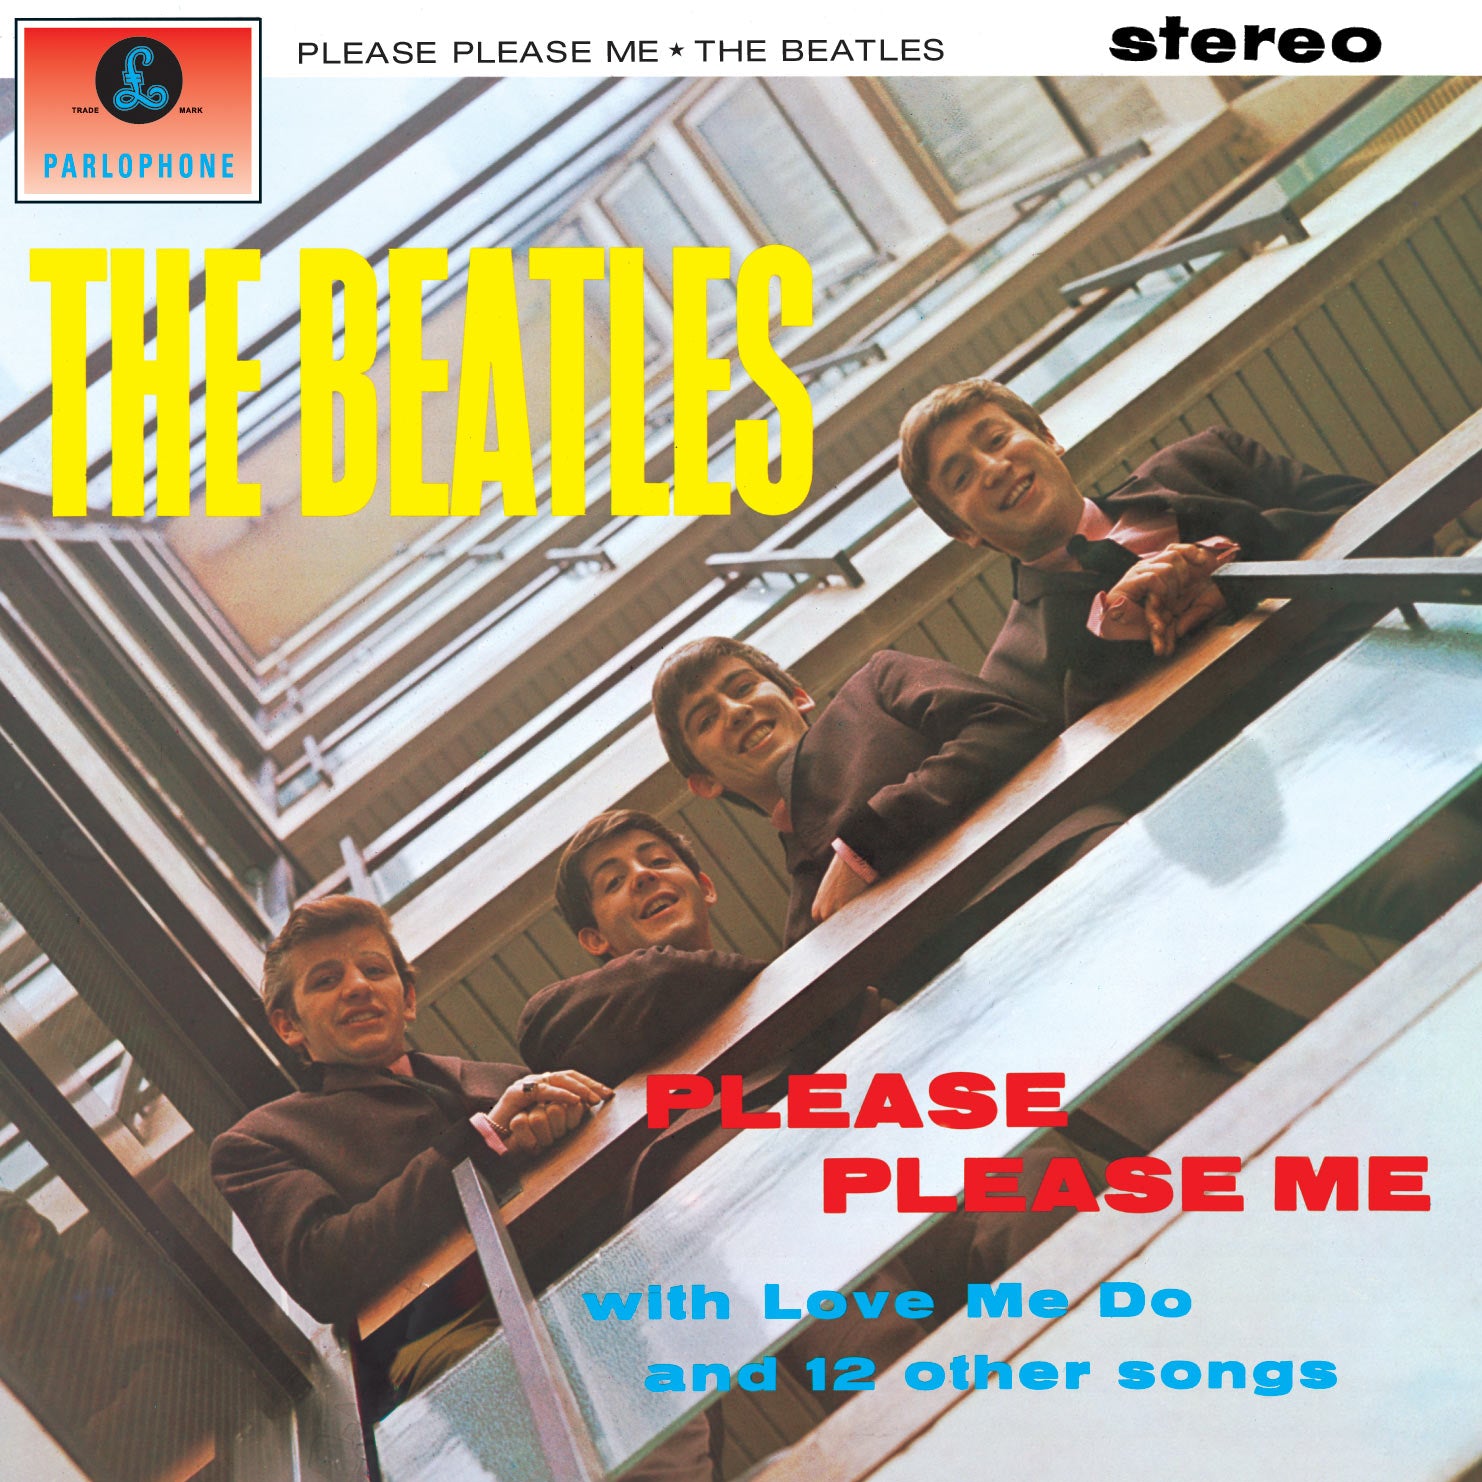 THE BEATLES - Please Please Me (Stereo Remaster) - LP - 180g Vinyl